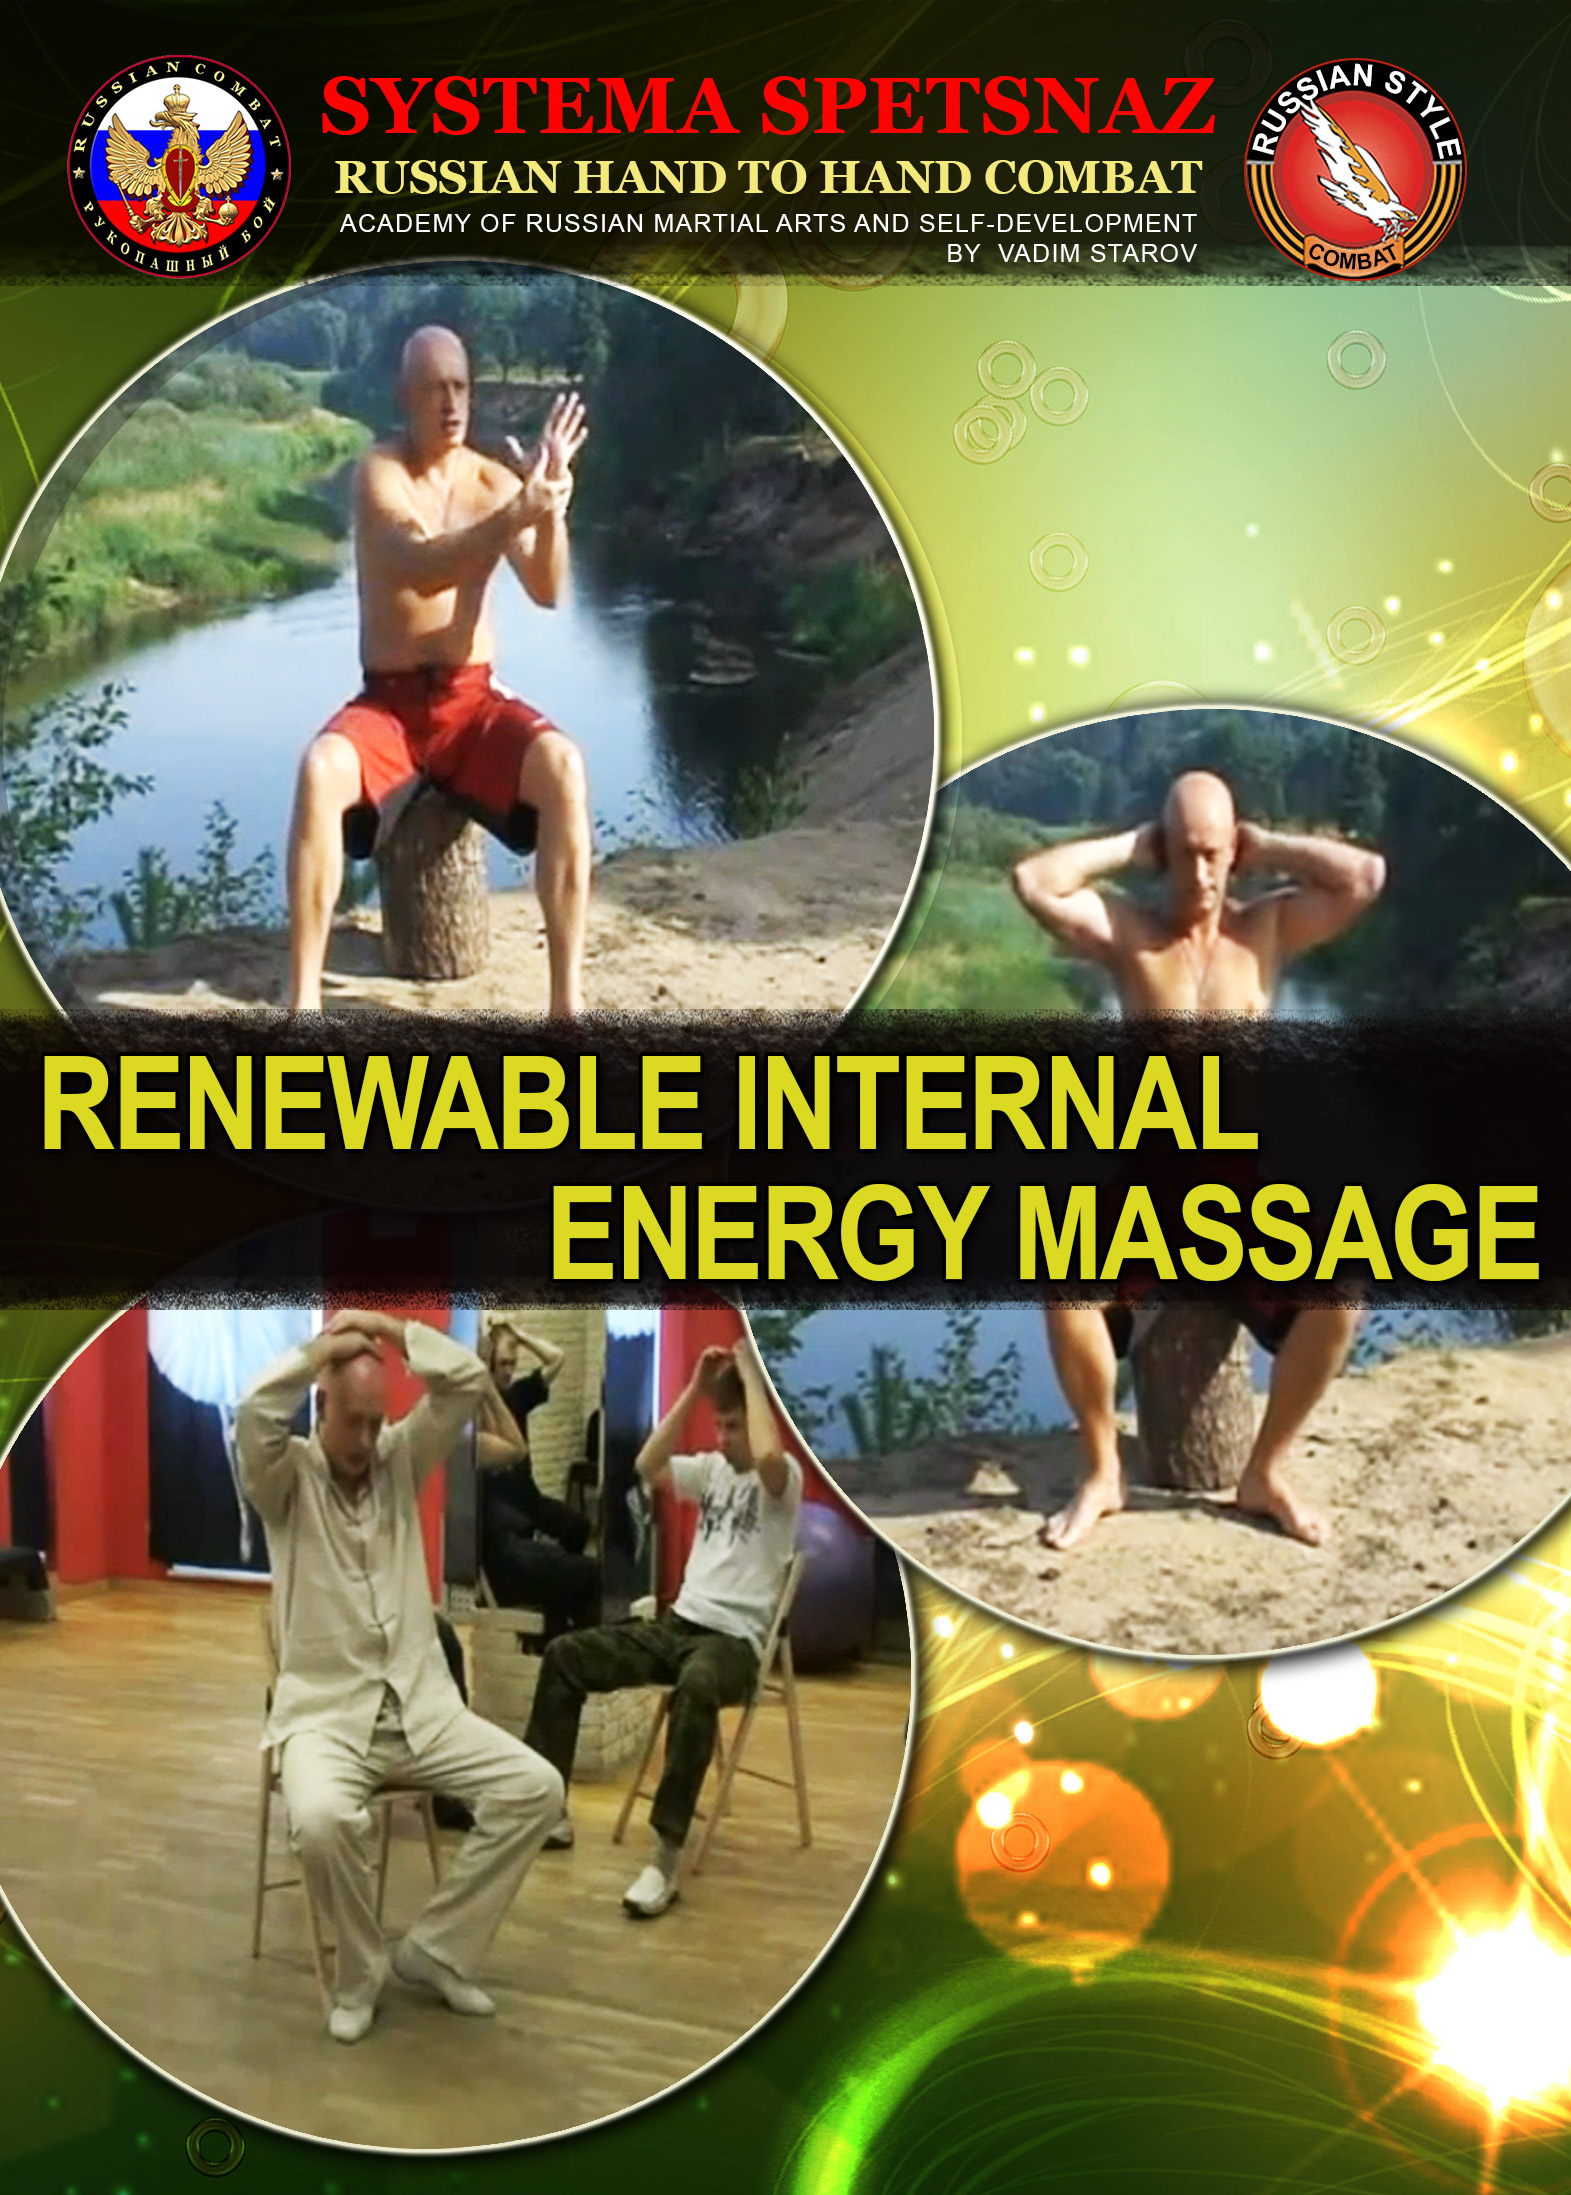 Systema Spetsnaz DVD #13: Self-Development - Renewable Internal Energy Massage